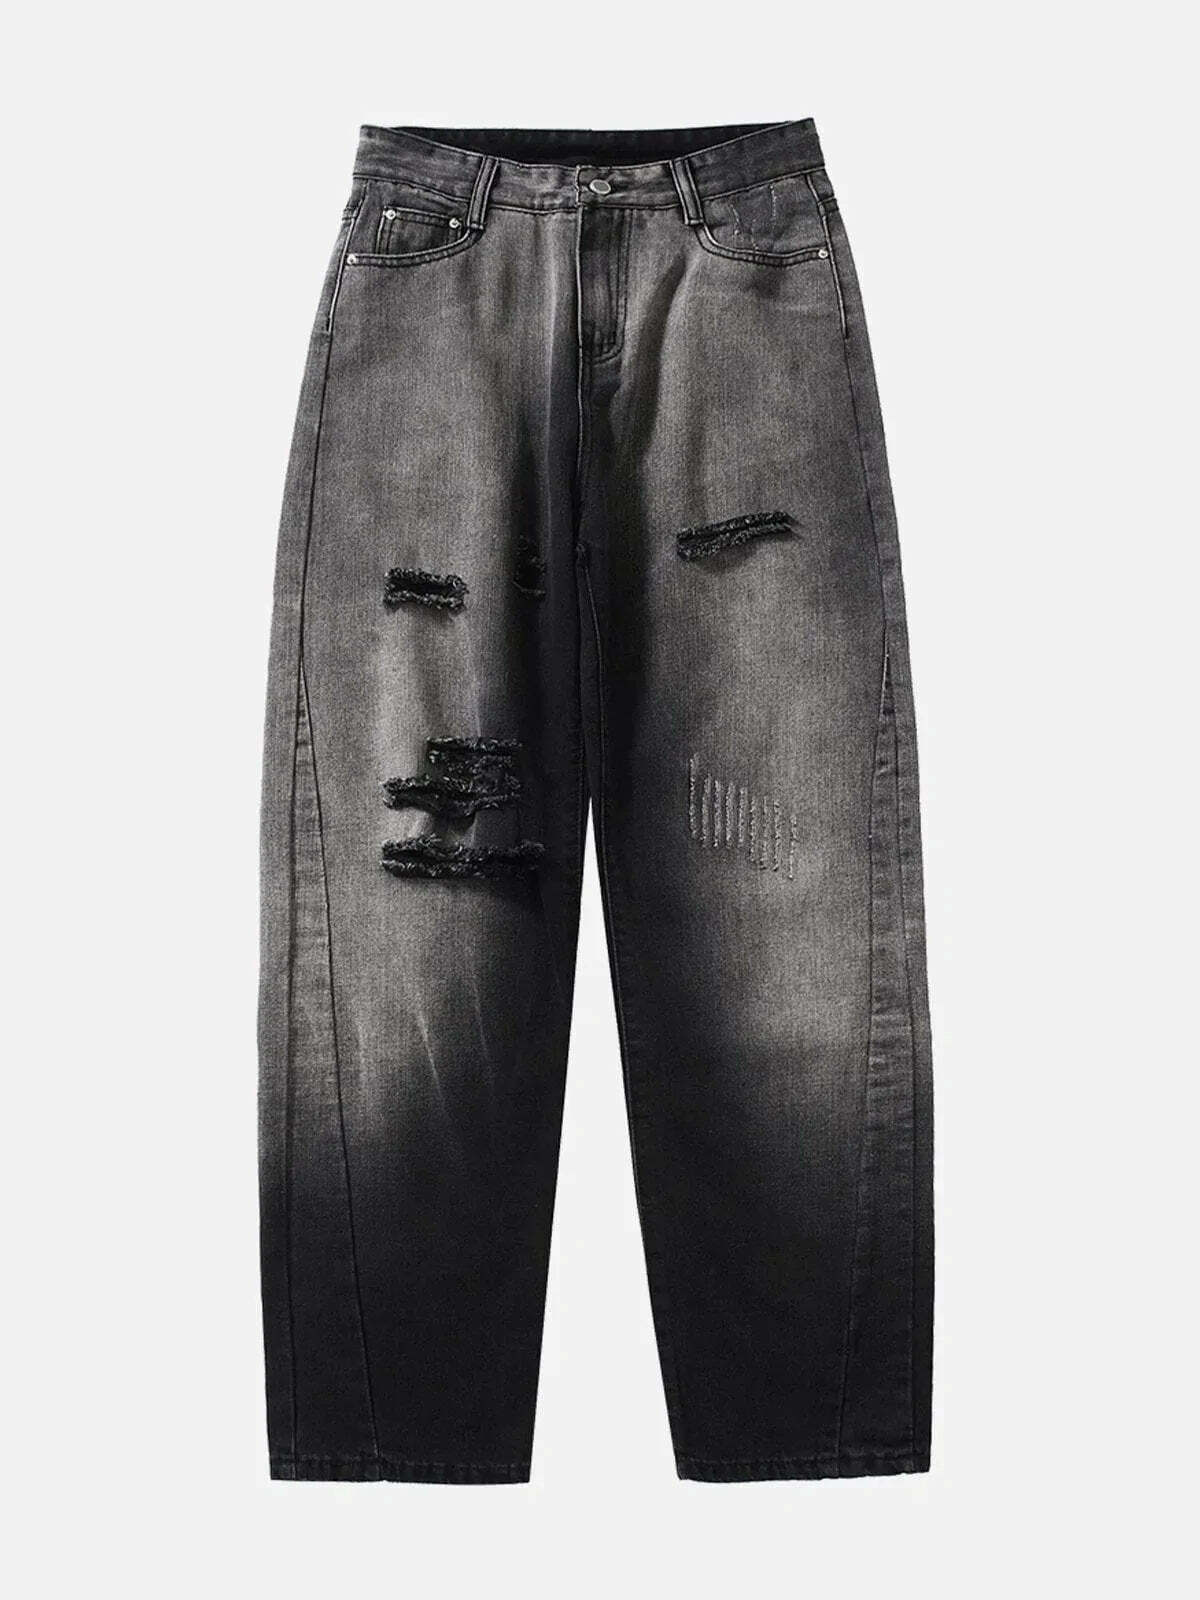 custom letter patch jeans edgy & trendy denim 6623